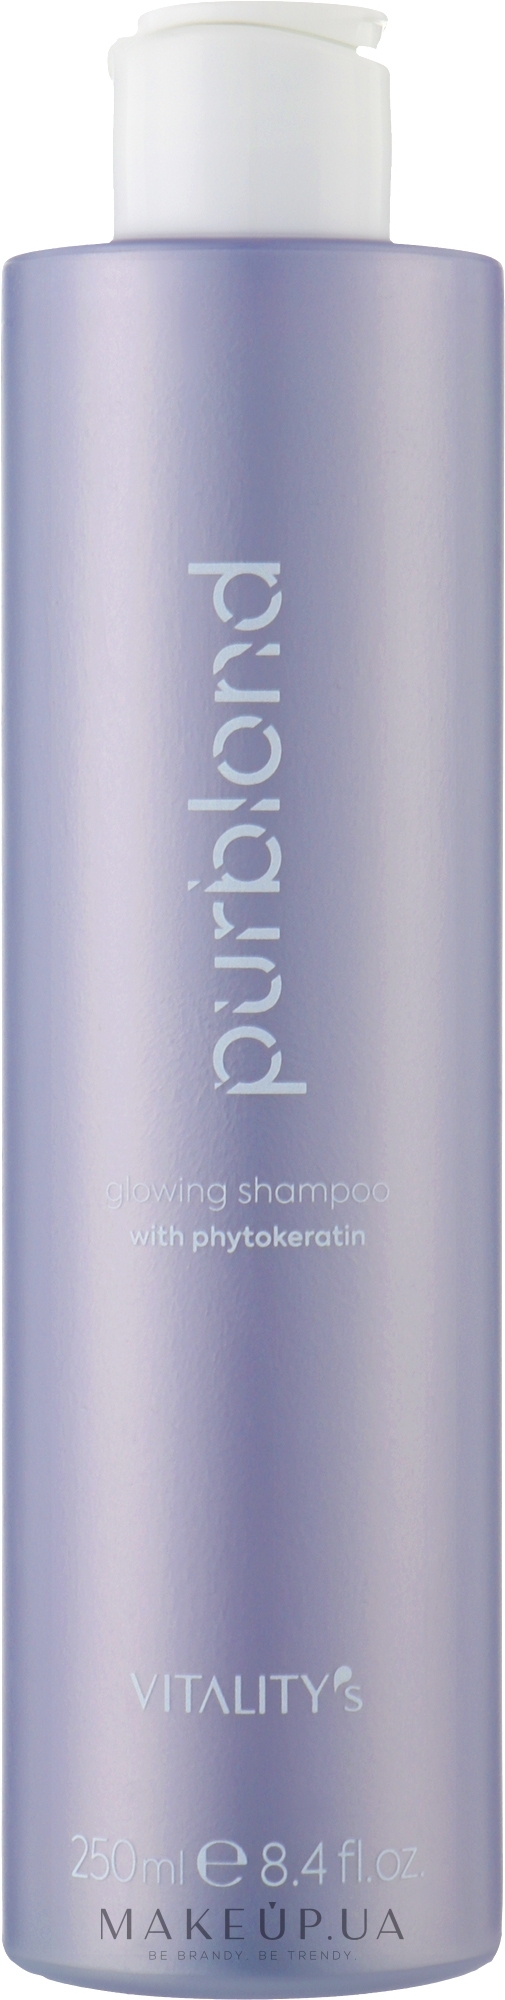 Шампунь для светлых волос - Vitality's Purblond Glowing Shampoo — фото 250ml